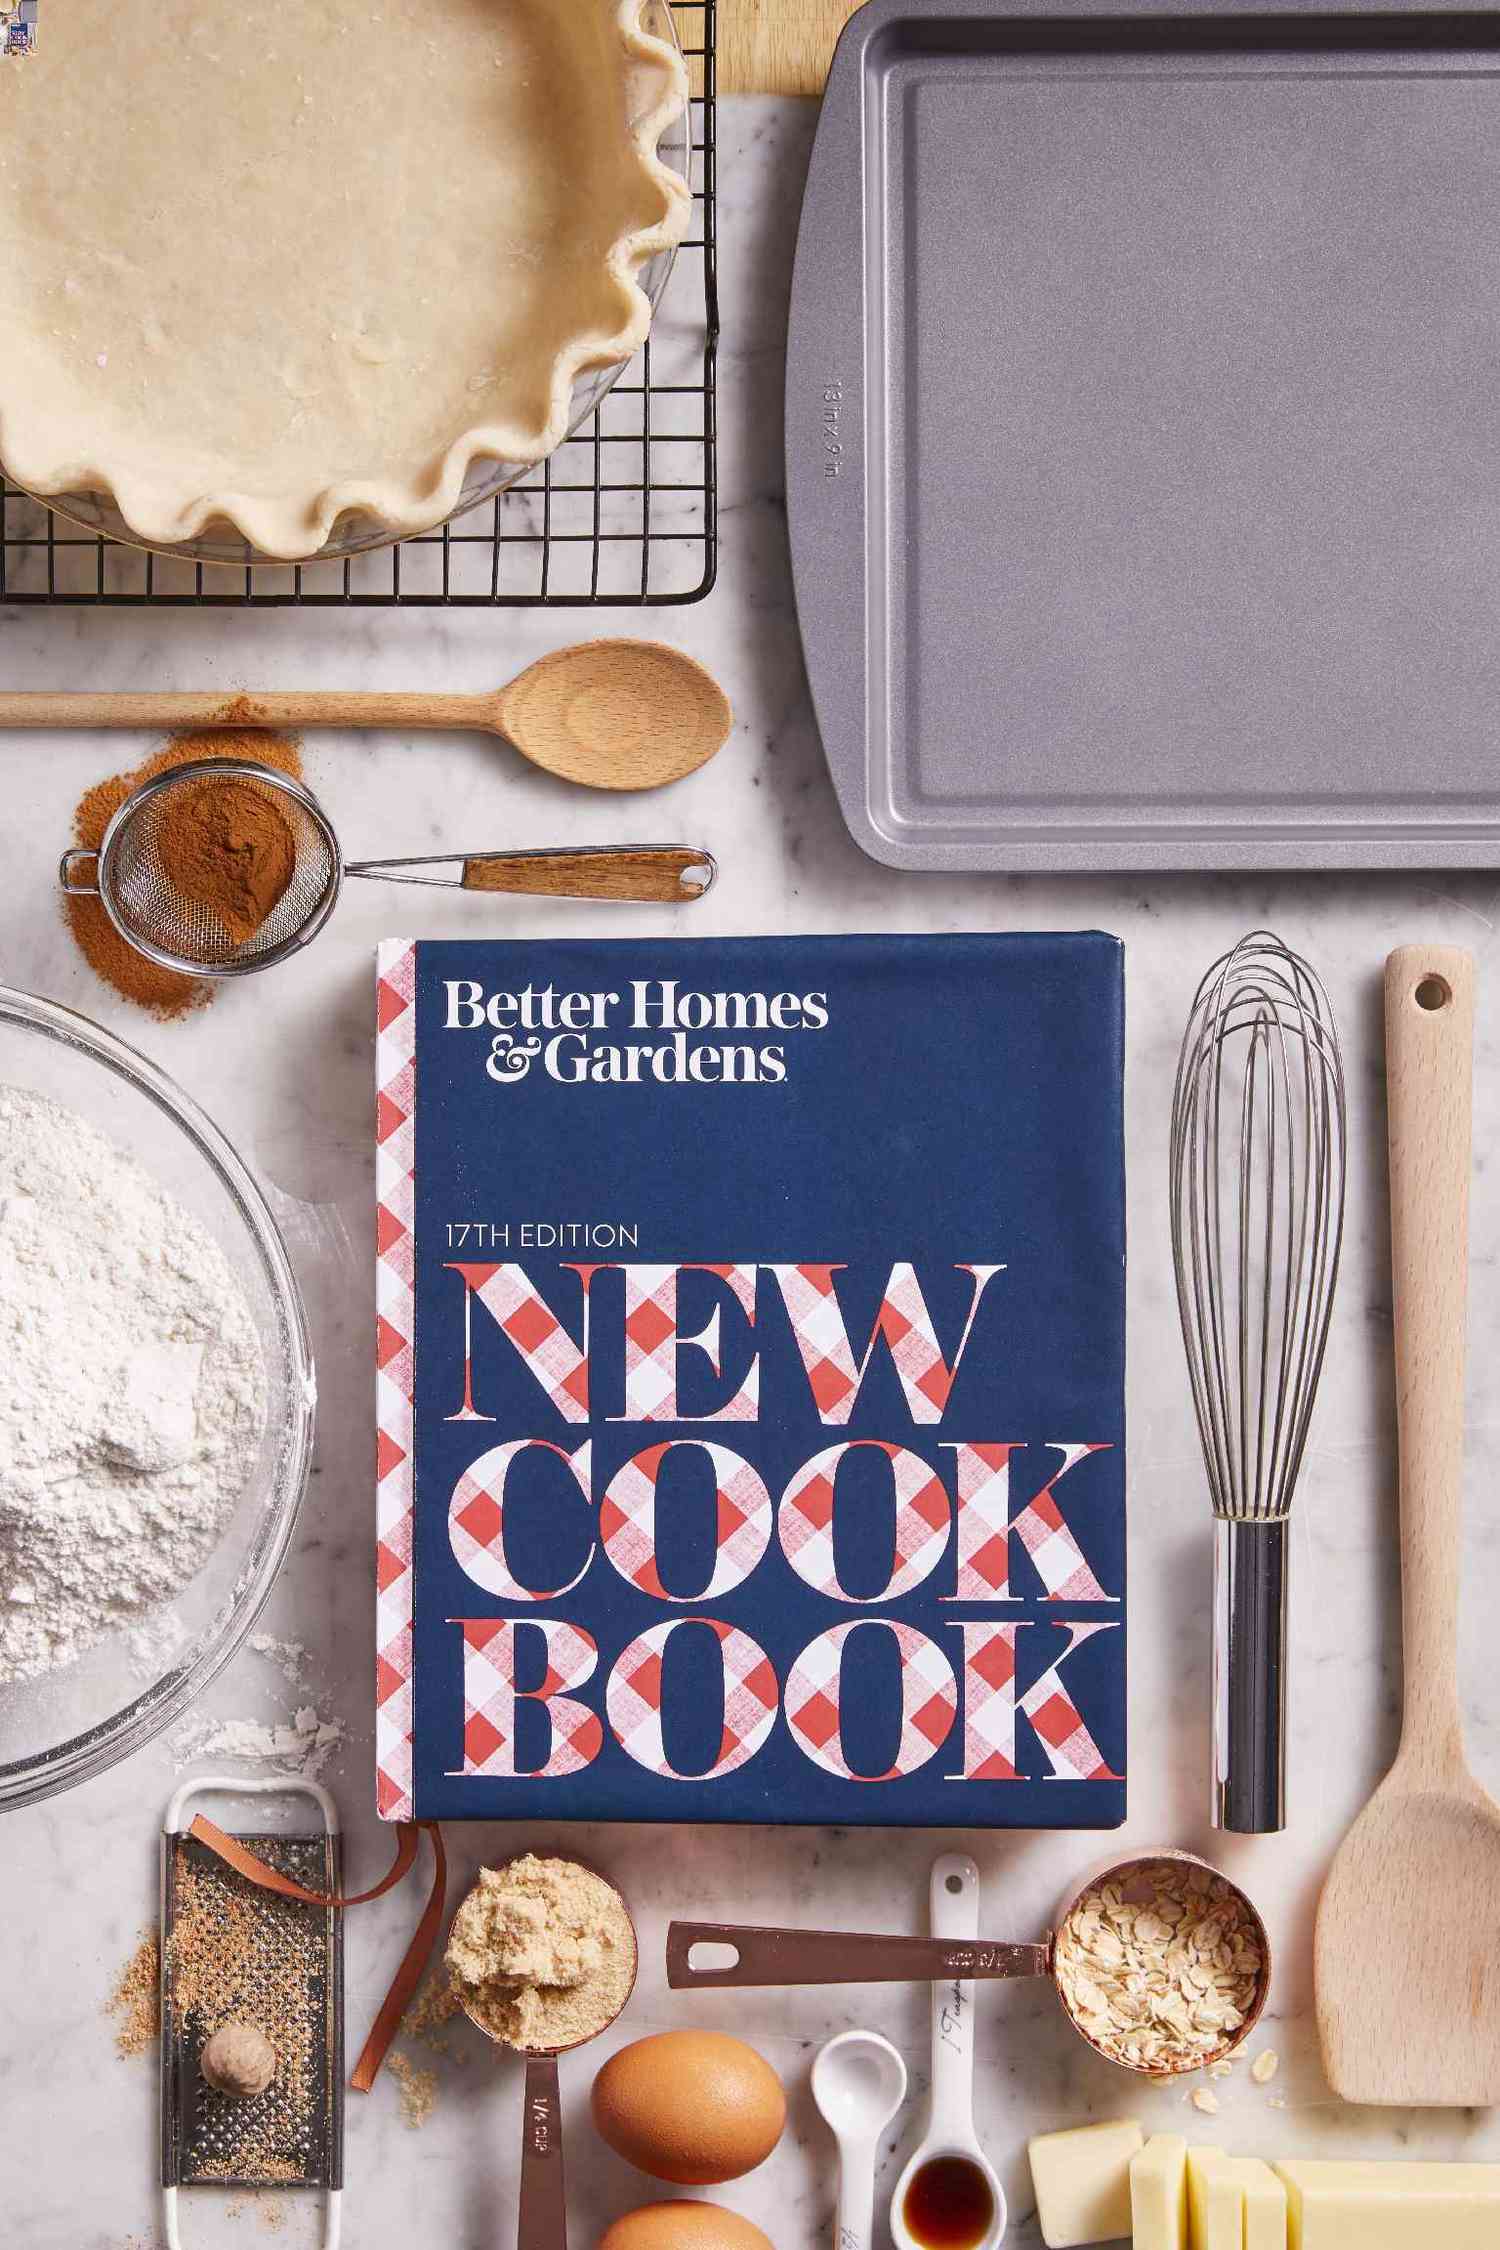 Sneak Peek New Cook Book 17th Edition Better Homes Gardens